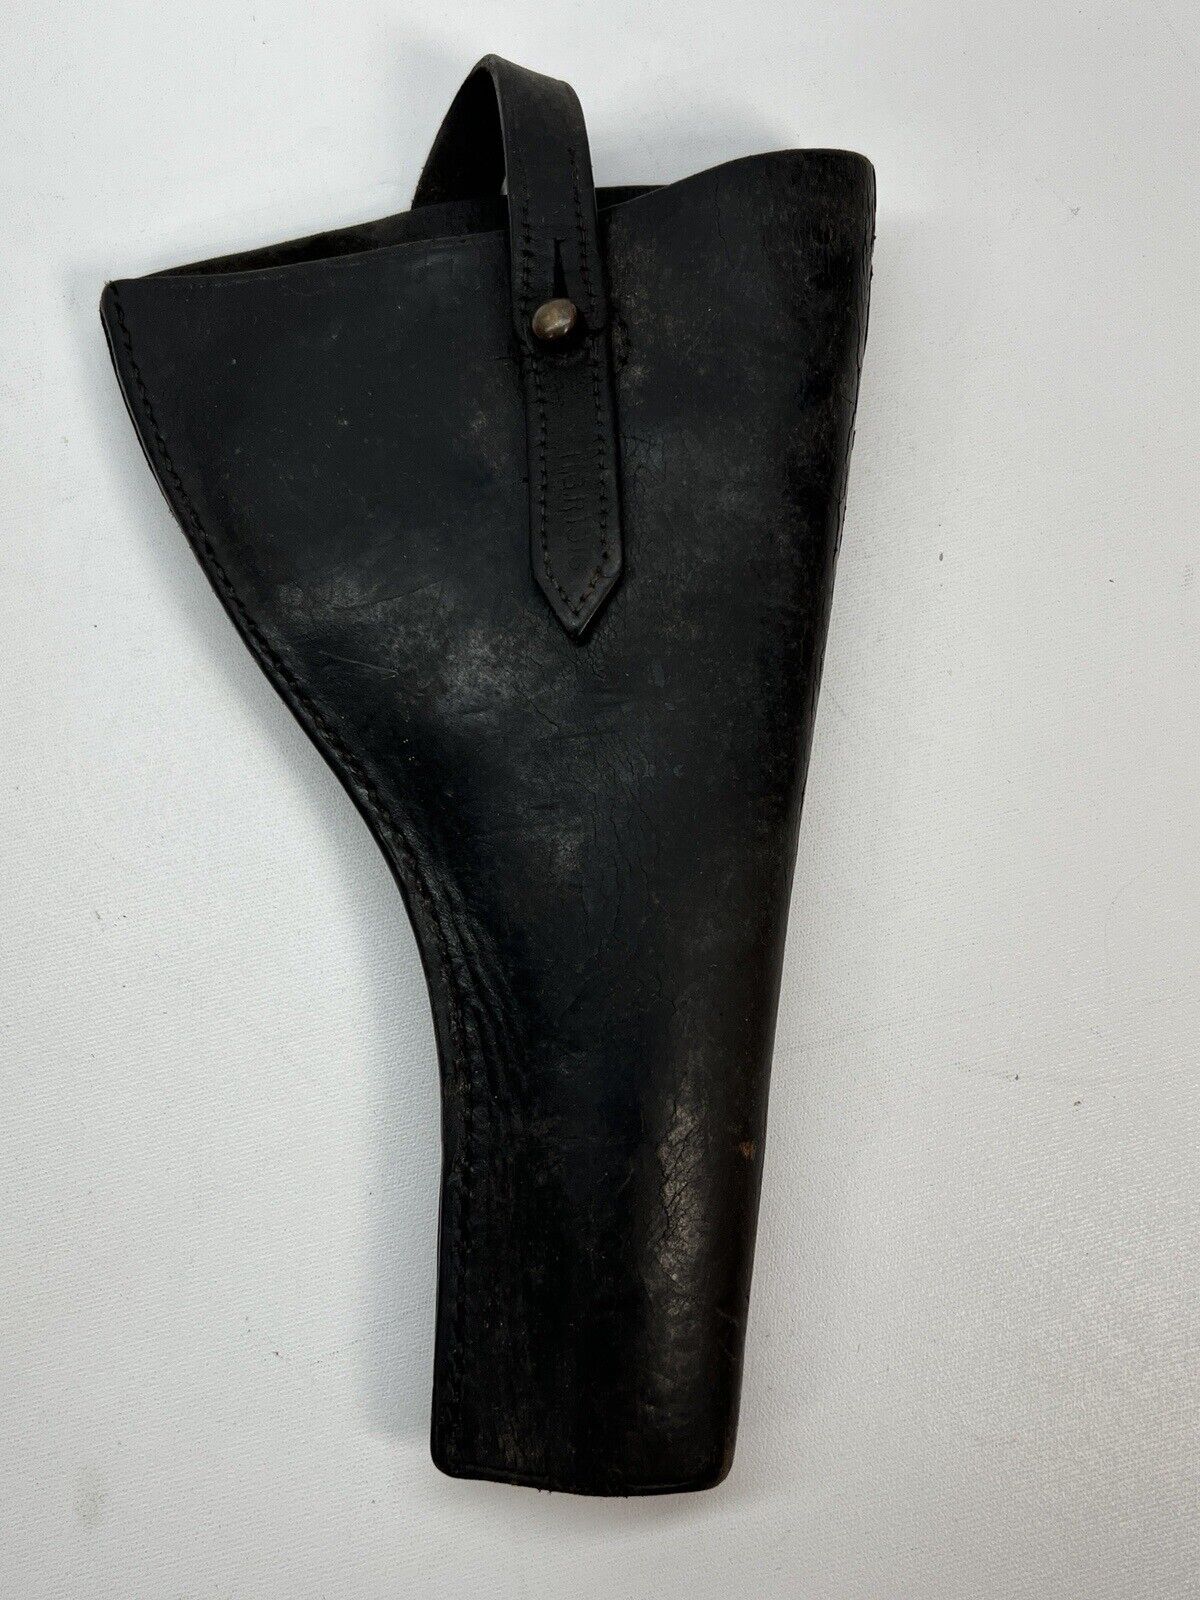 ORIGINAL 1916 WW1 BRITISH  P14 OPEN-TOP PISTOL HOLSTER, MODIFIED Black Leather